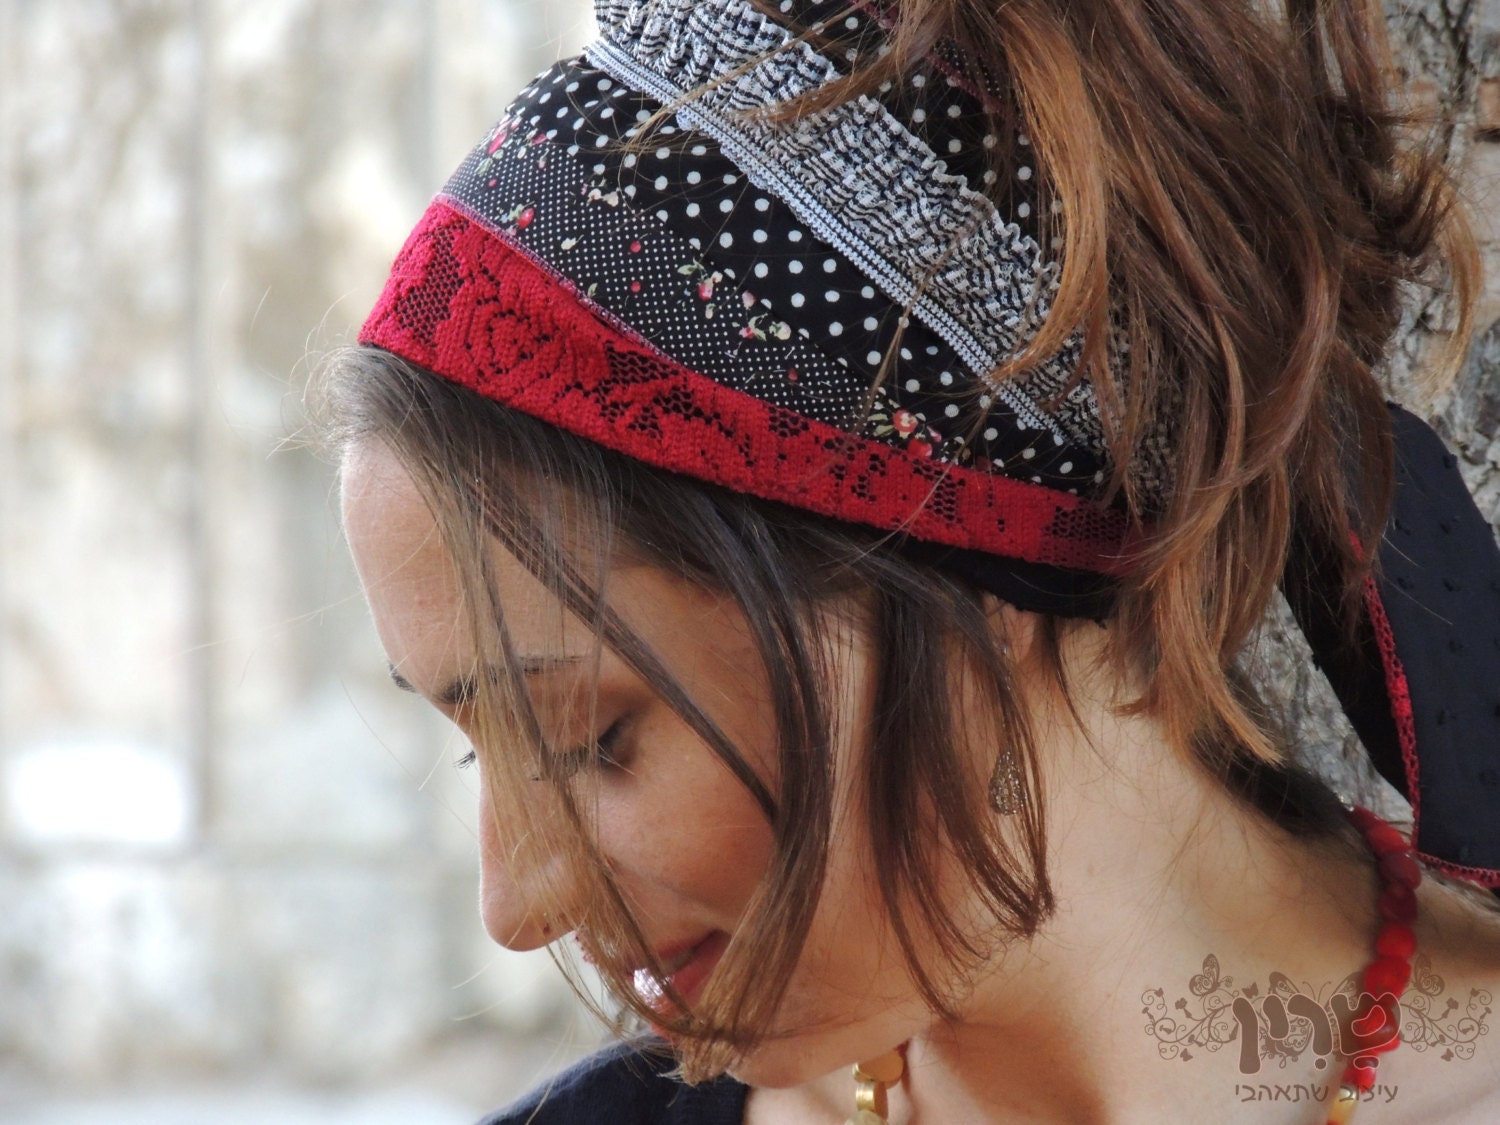 Dancing Spring Red & Black Half Headcovering Headband - Etsy